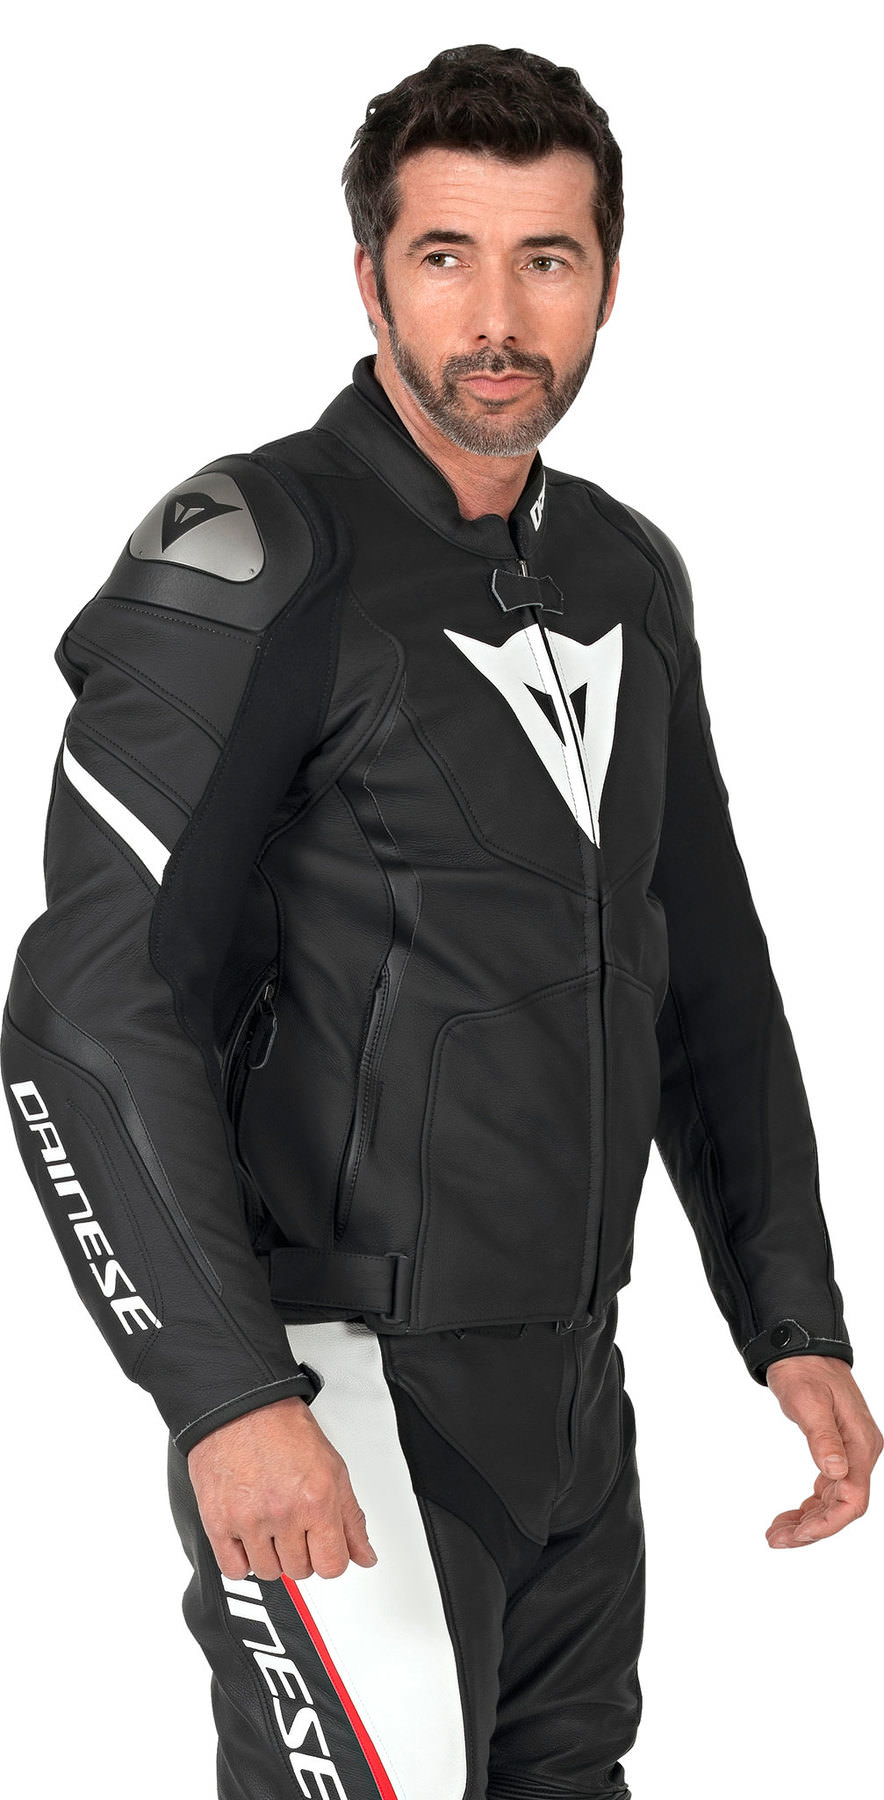 Buy Büse Toursport Evo textile jacket | Louis motorcycle 